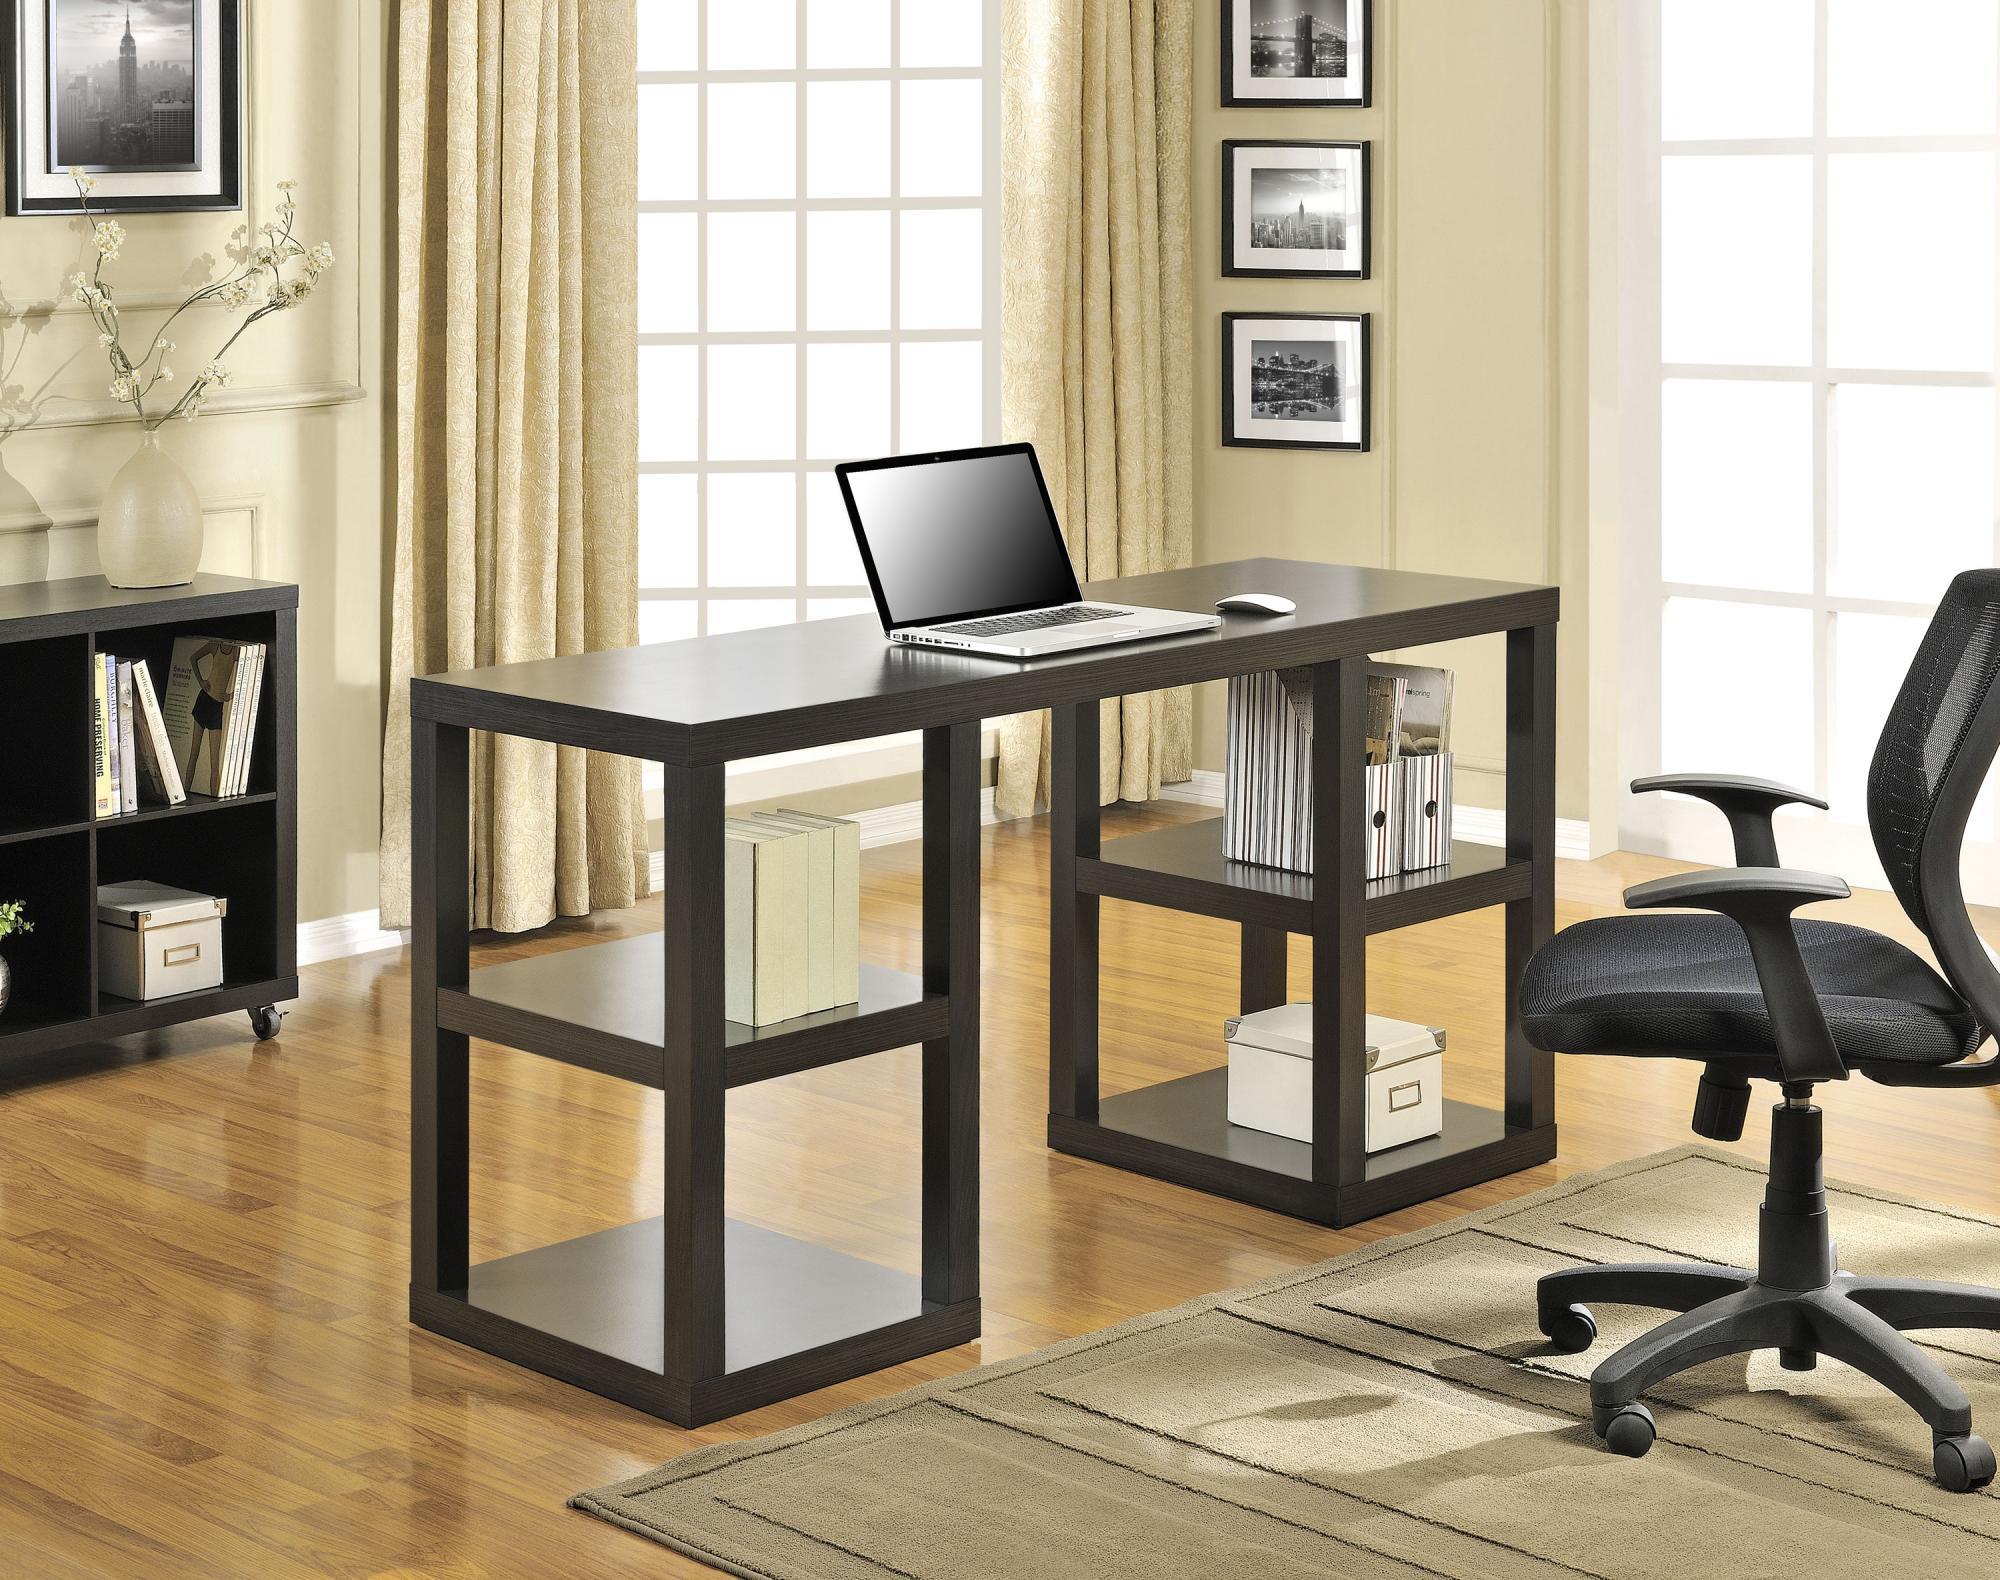 Mainstays Double Pedestal Computer Desk, Espresso - image 1 of 4